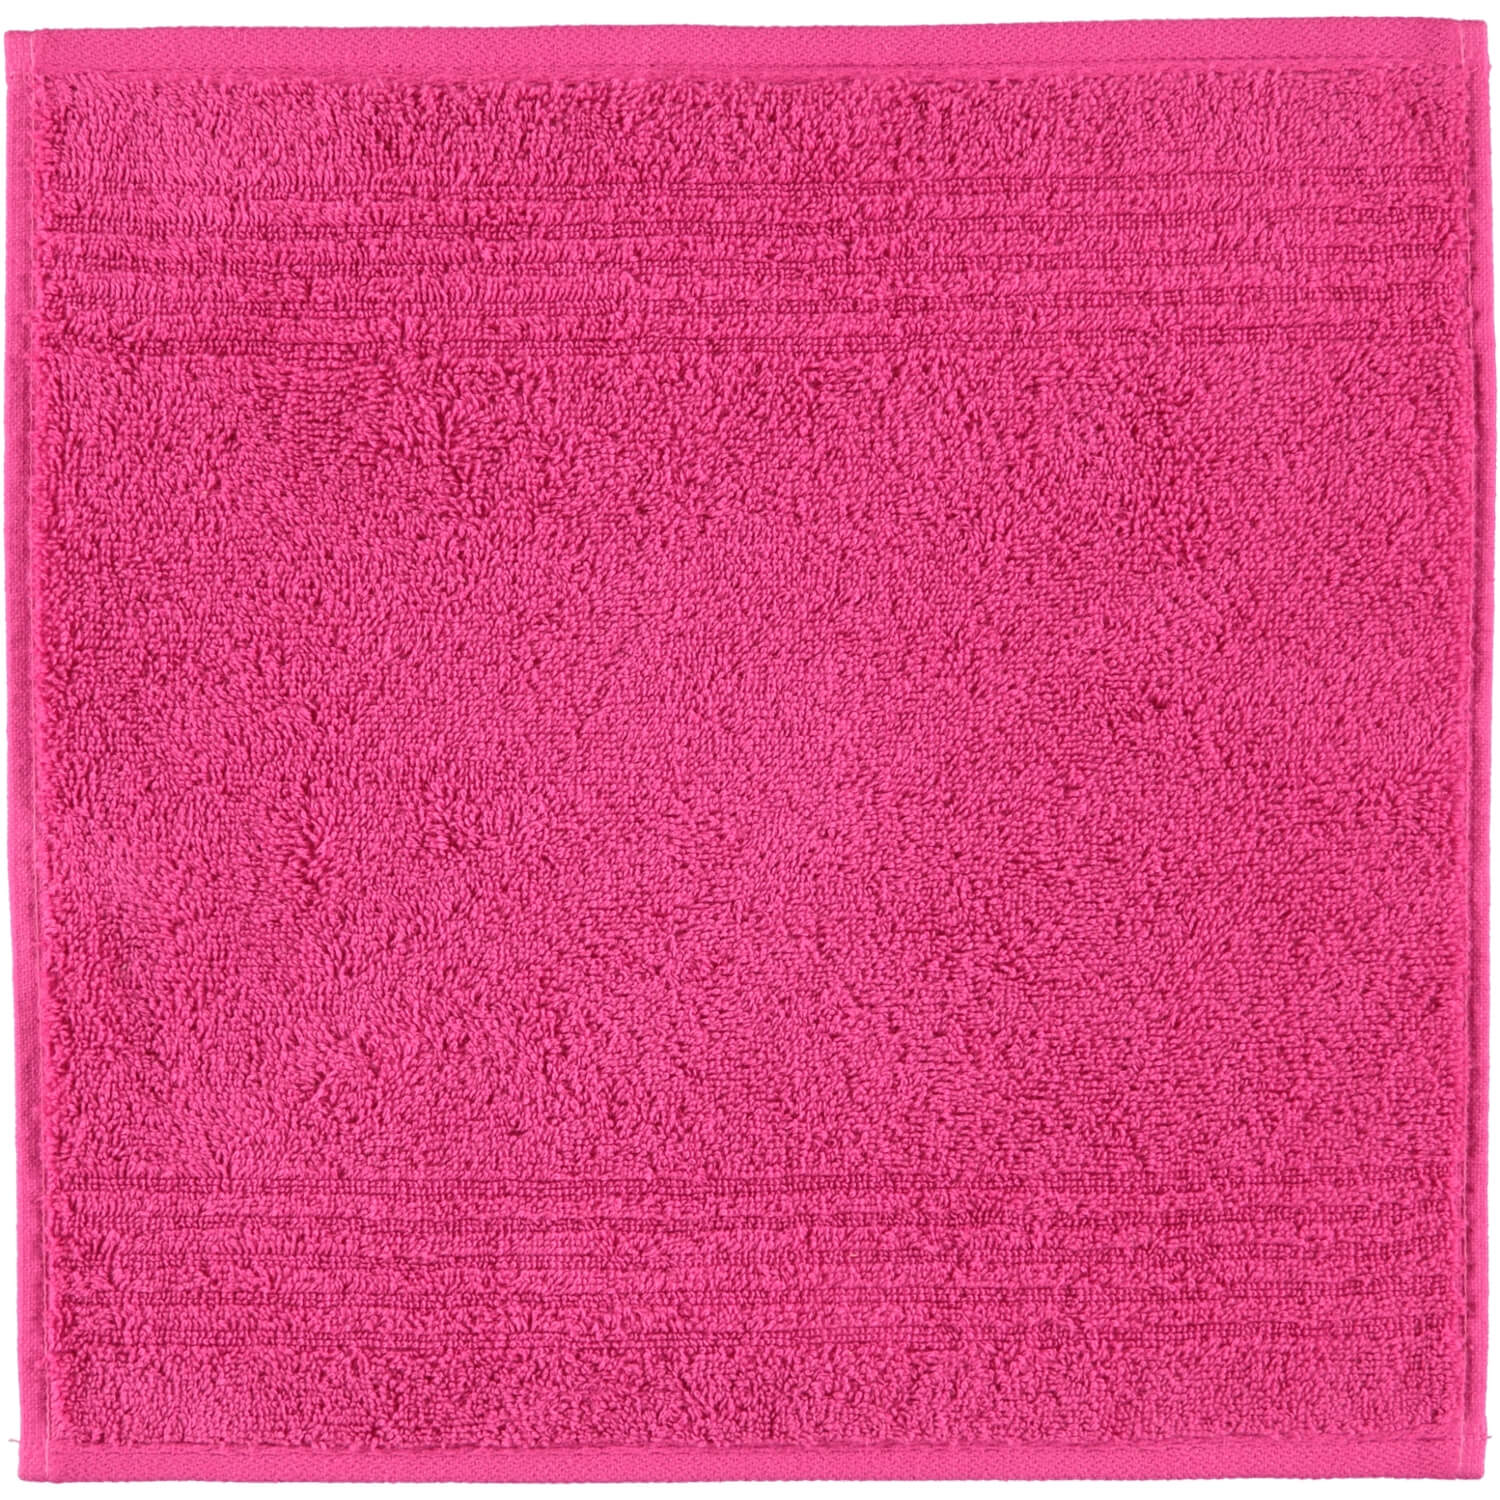 Розовое полотенце Essential Pink ☞ Размер: 50 x 100 см